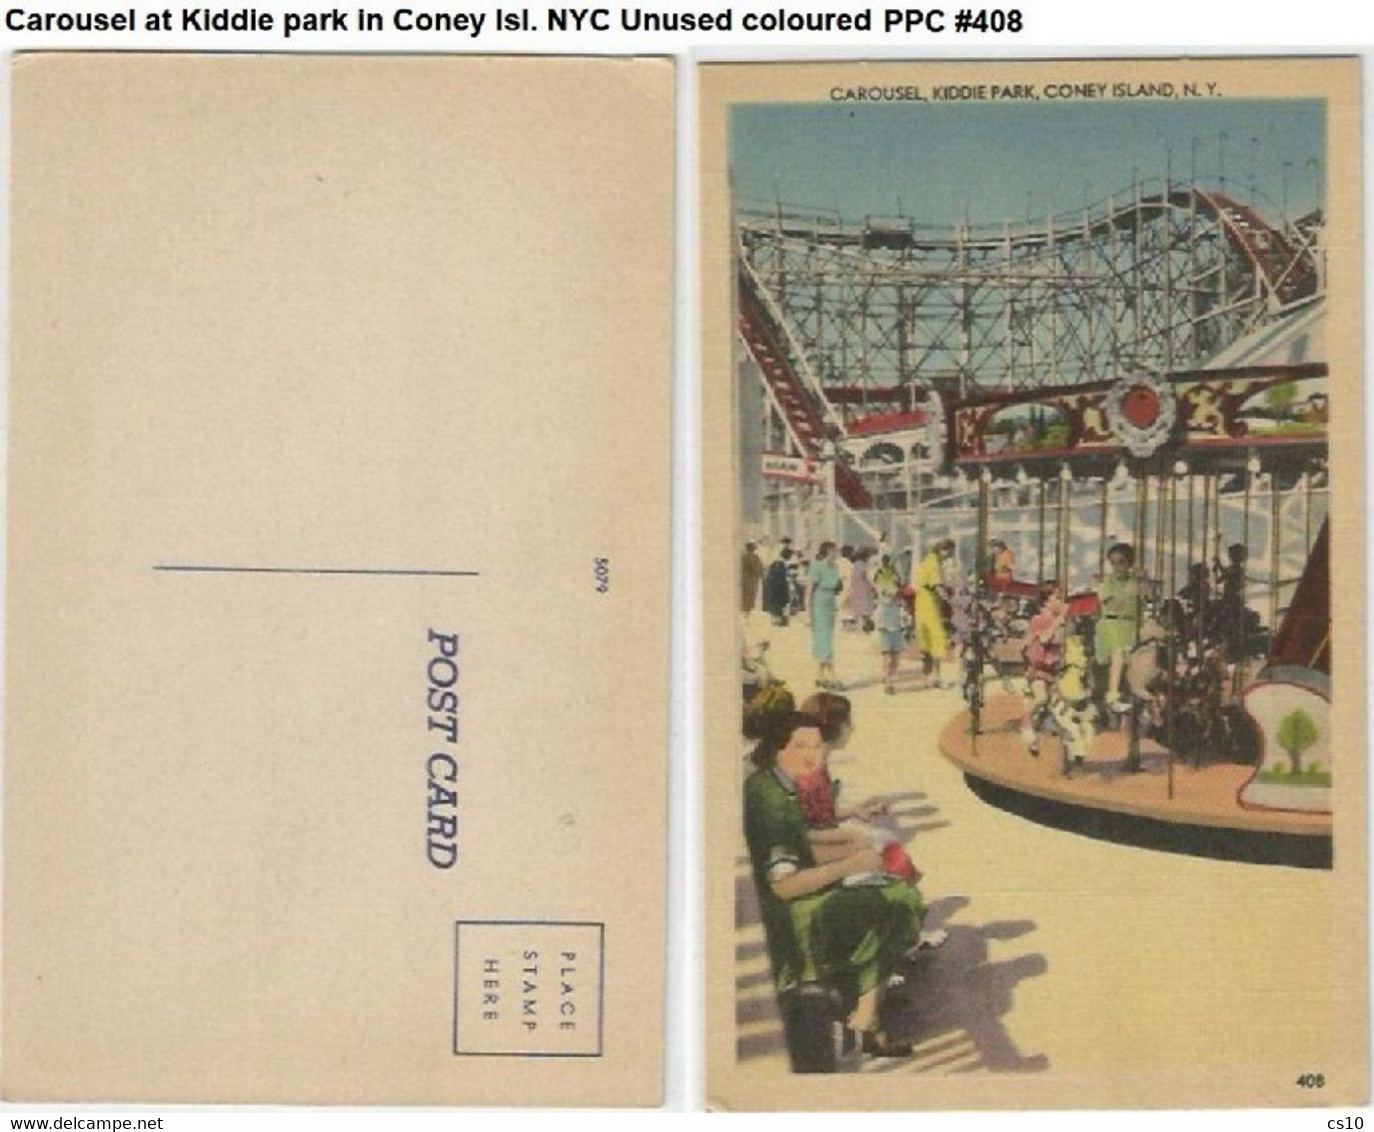 Carousel At Kiddie Park In Coney Isl. NYC Unused Coloured PPC #408 - Parks & Gärten